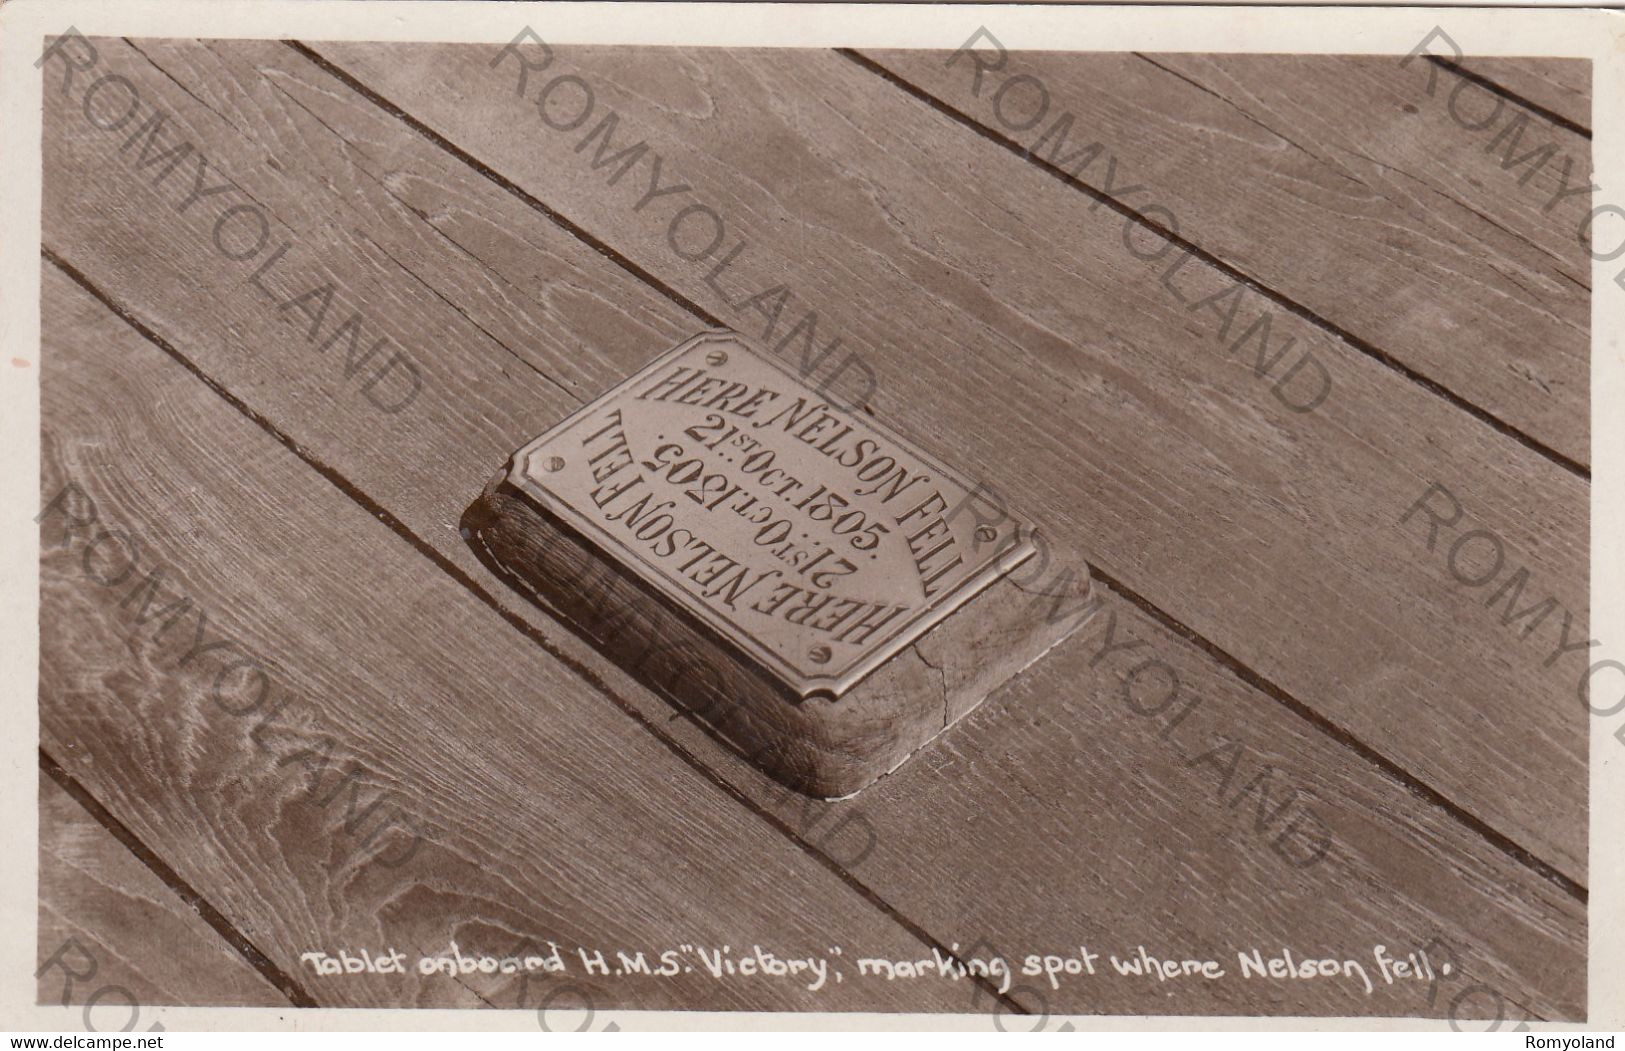 CARTOLINA   TABLET ONBOARD H.M.S."VICTORY",MARKING SPOT WHERE NELSON FELL,NON VIAGGIATA - Mundo